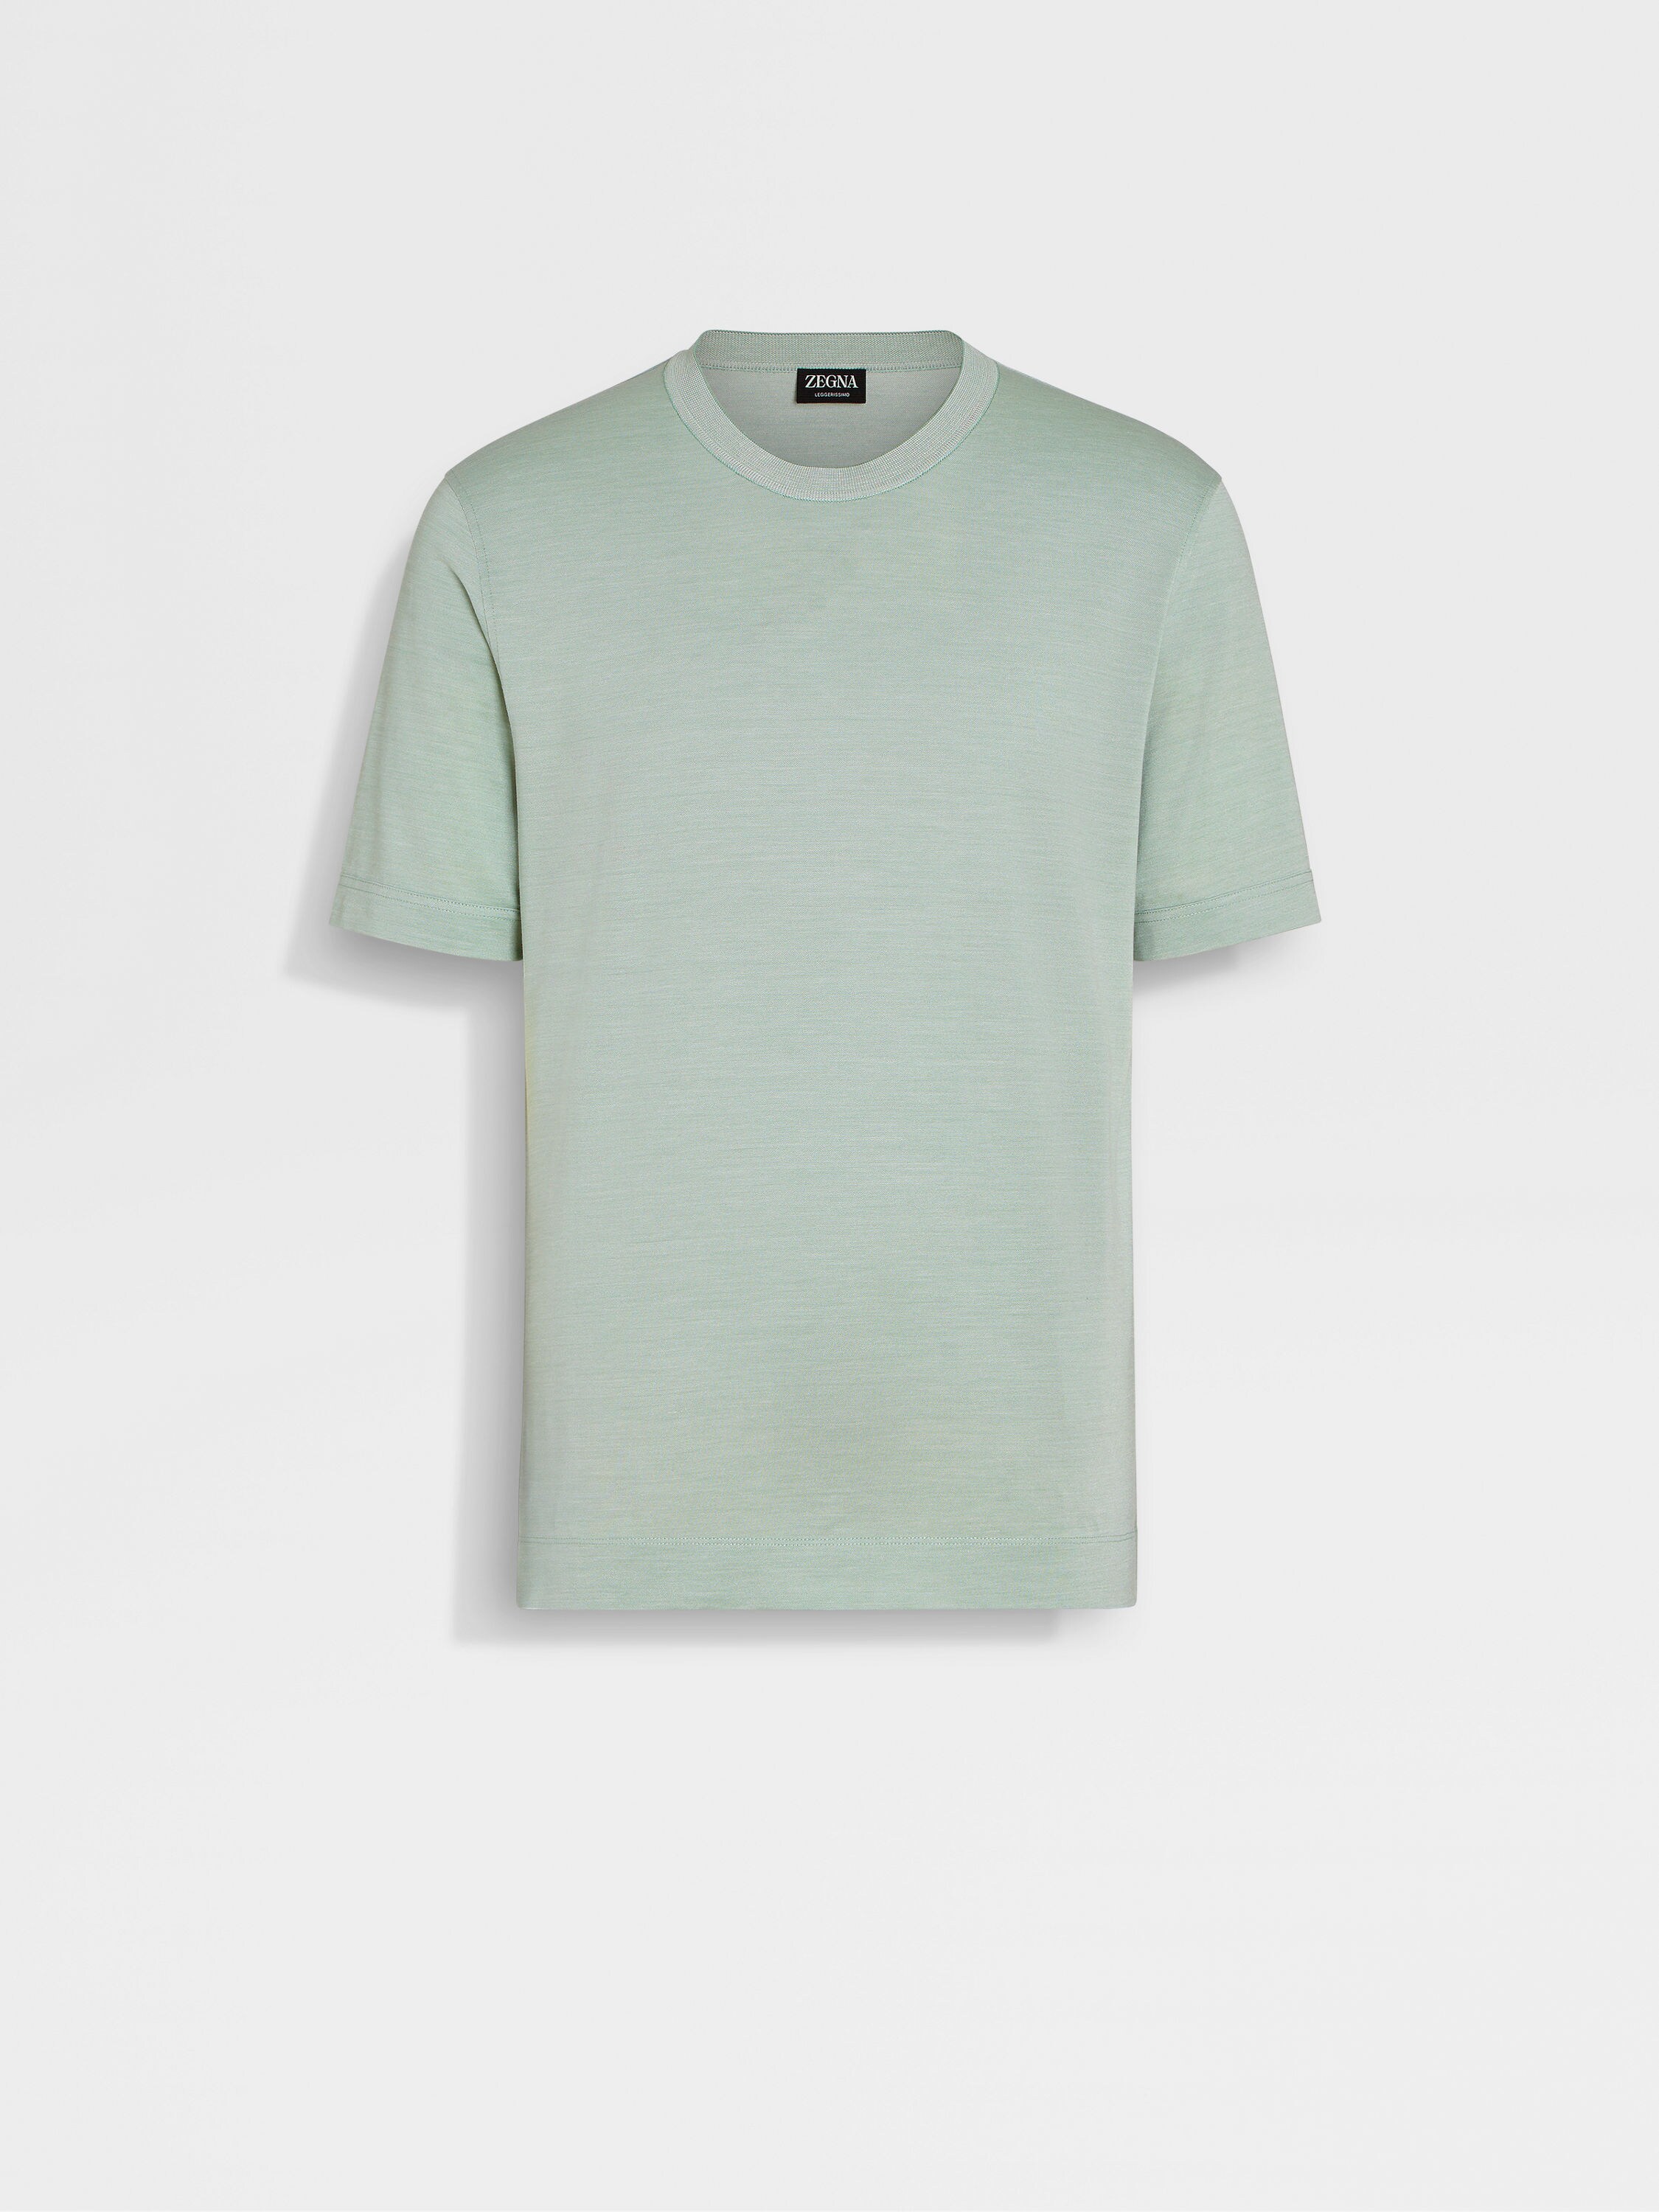 Sage Green Leggerissimo Silk and Cotton T-shirt